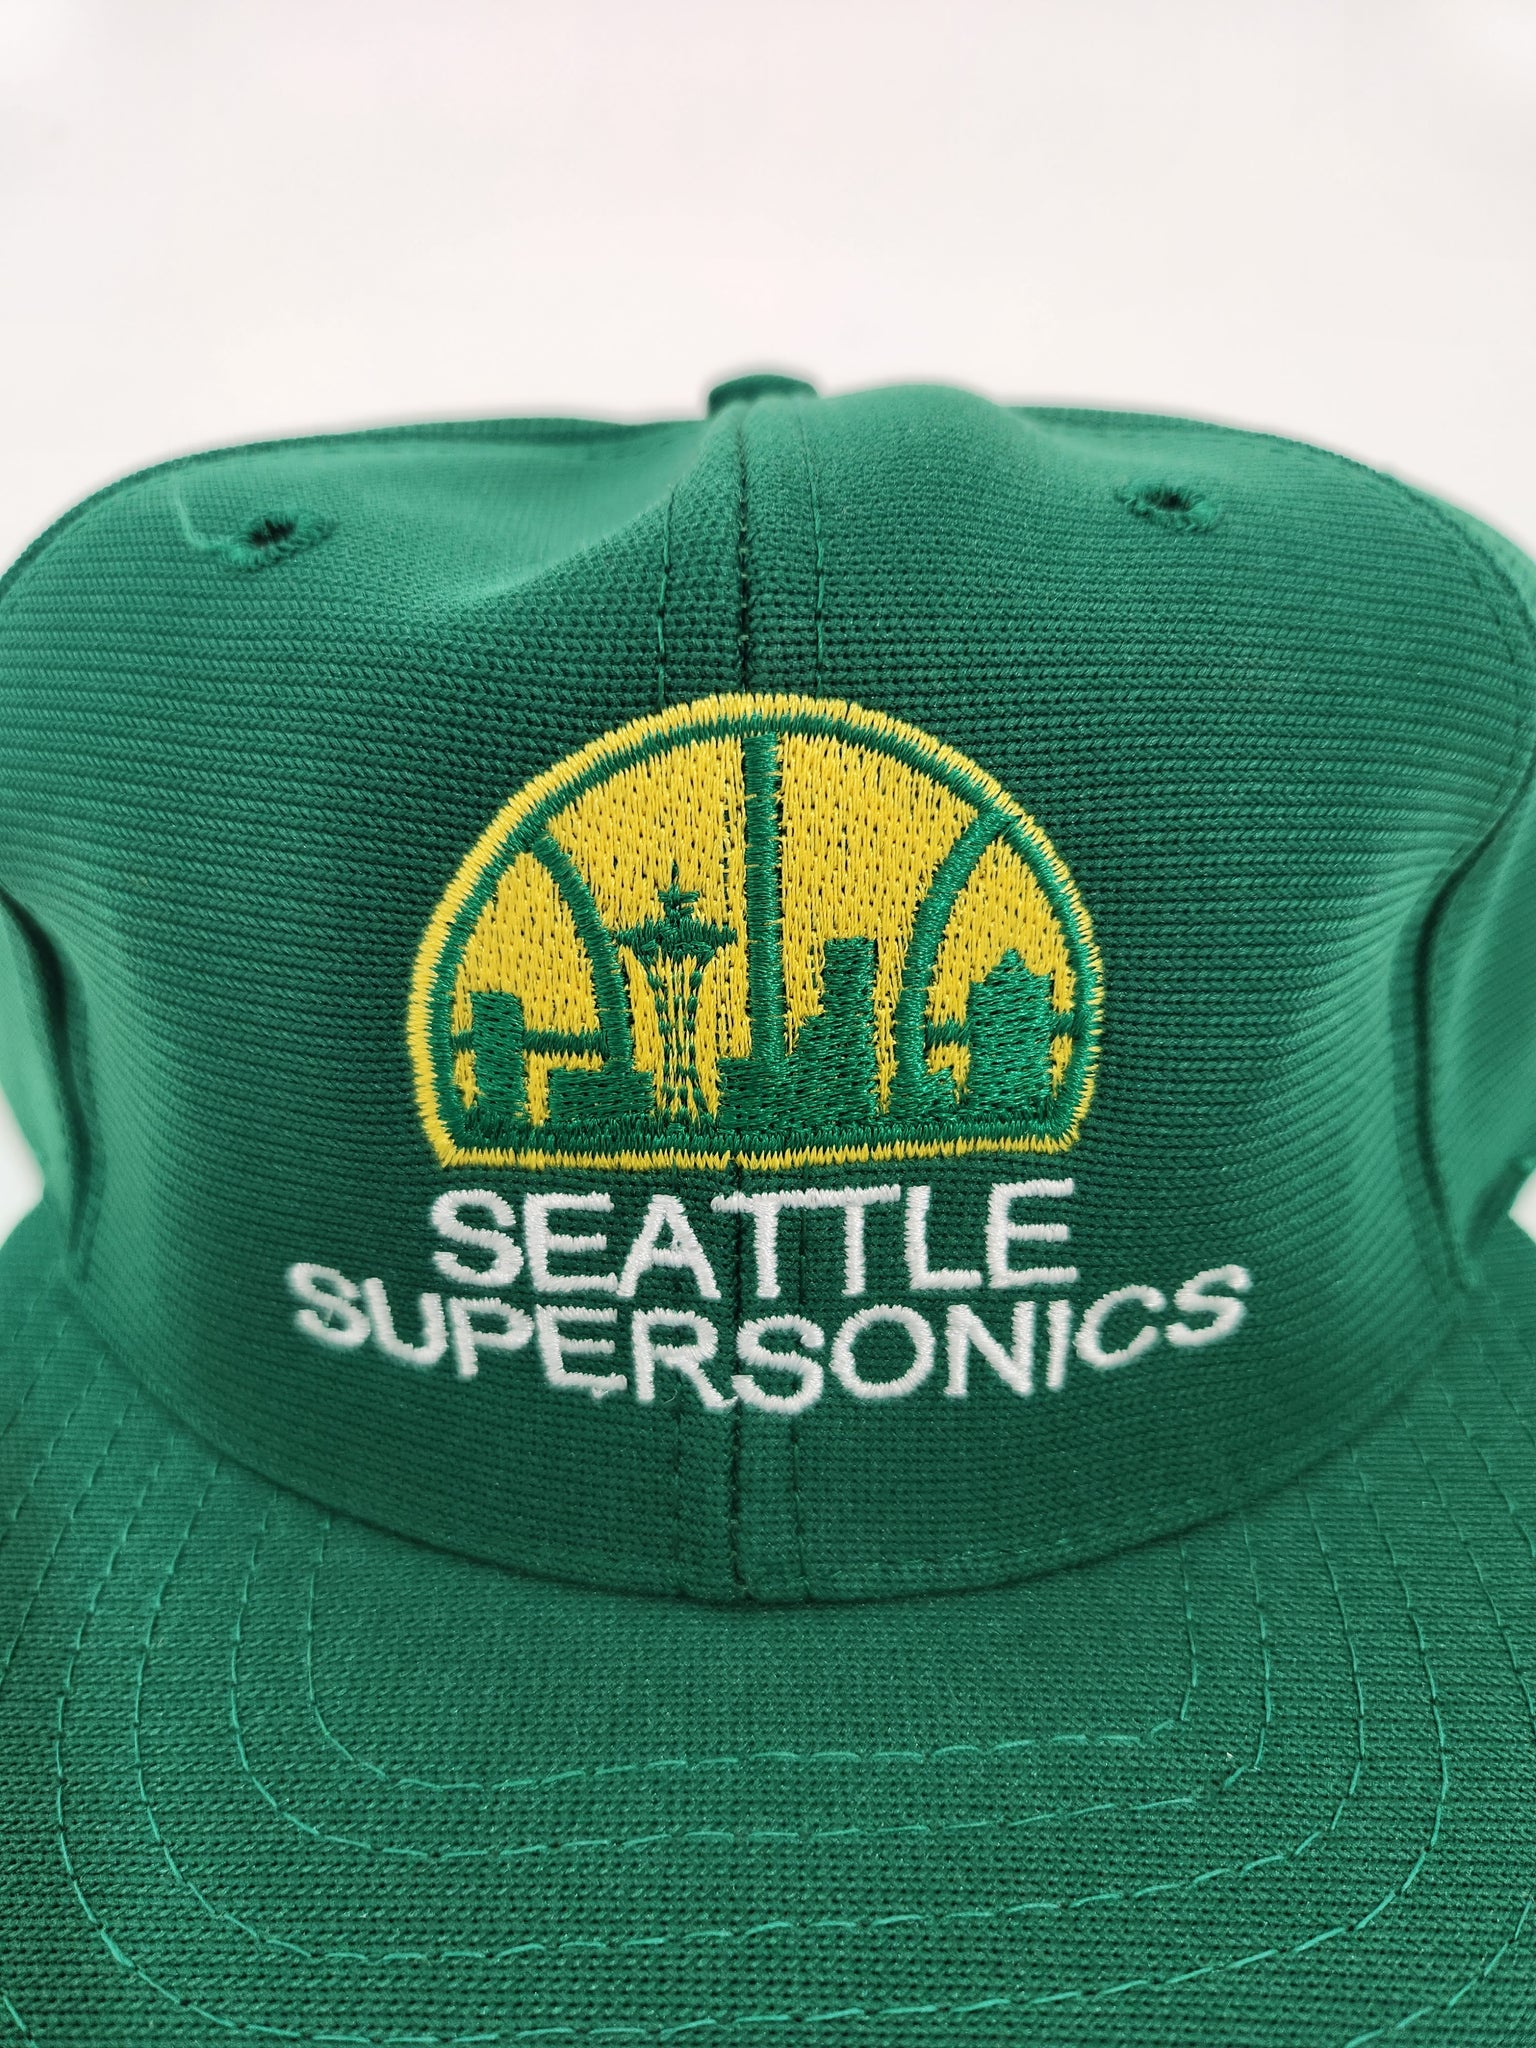  Supersonics Hat